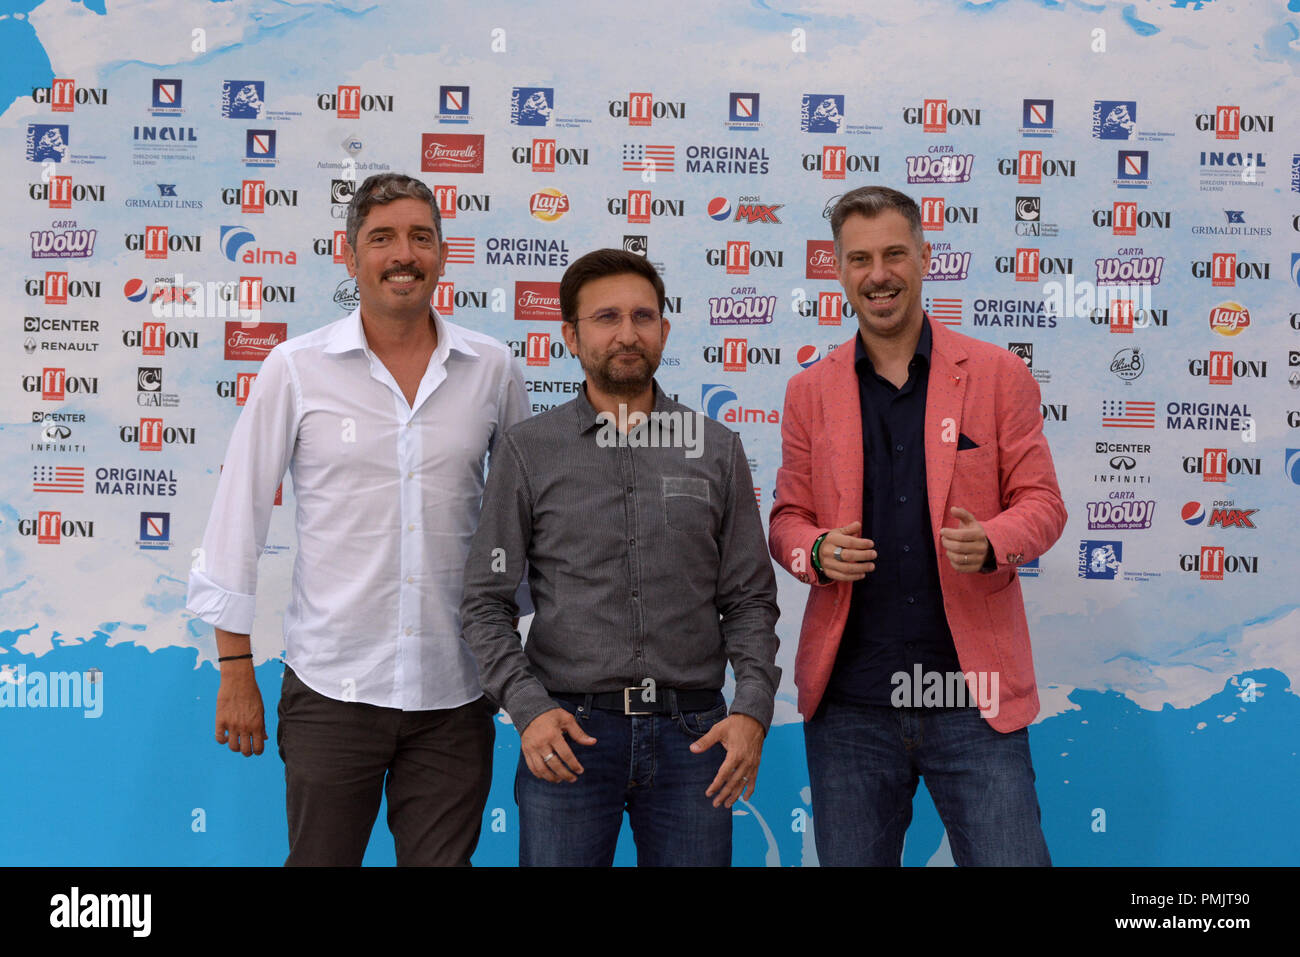 Giffoni Valle Piana, Sa, Italy - July 21, 2018 : Trio Medusa at Giffoni Film Festival 2018 - on July 21, 2018 in Giffoni Valle Piana, Italy Stock Photo